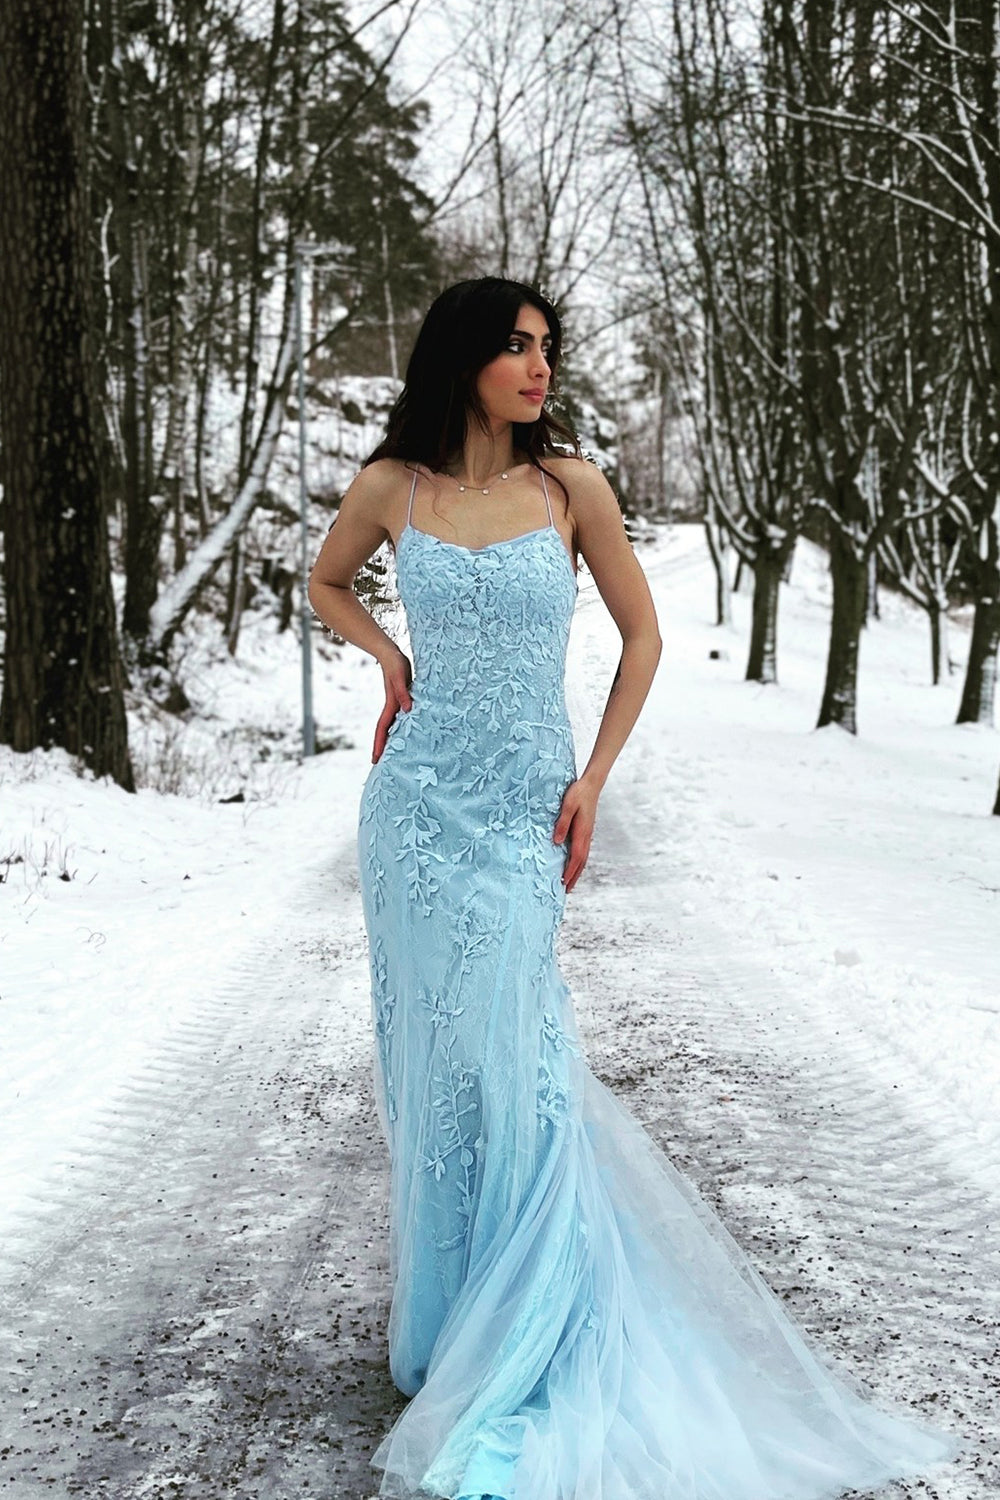 Blue Spaghetti Straps Mermaid Prom Dress